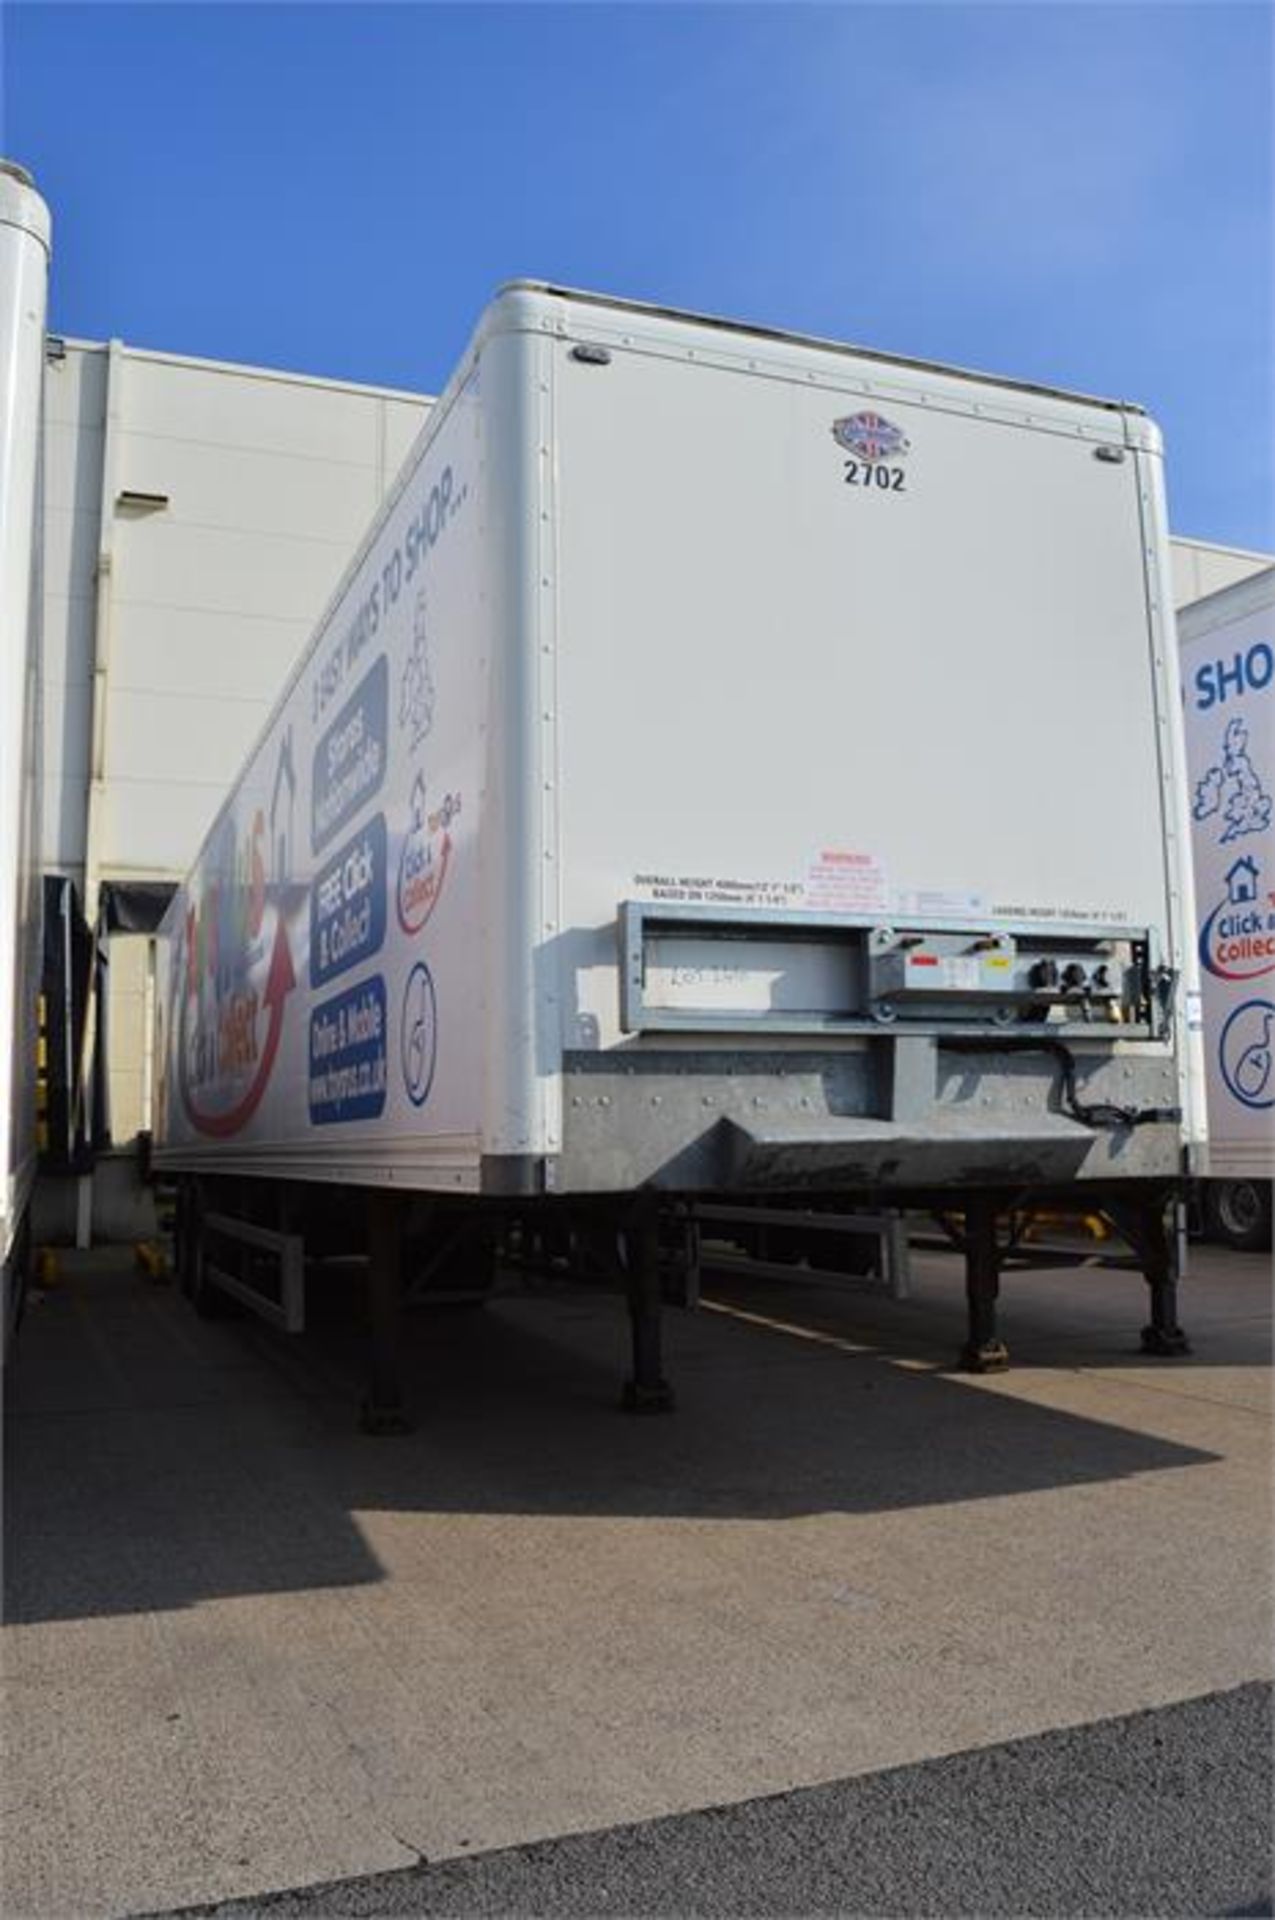 2014 Cartwright, twin axle 40ft box trailer, VIN: A141082, MOT: June 2018 with Dhollandia, 1500kg